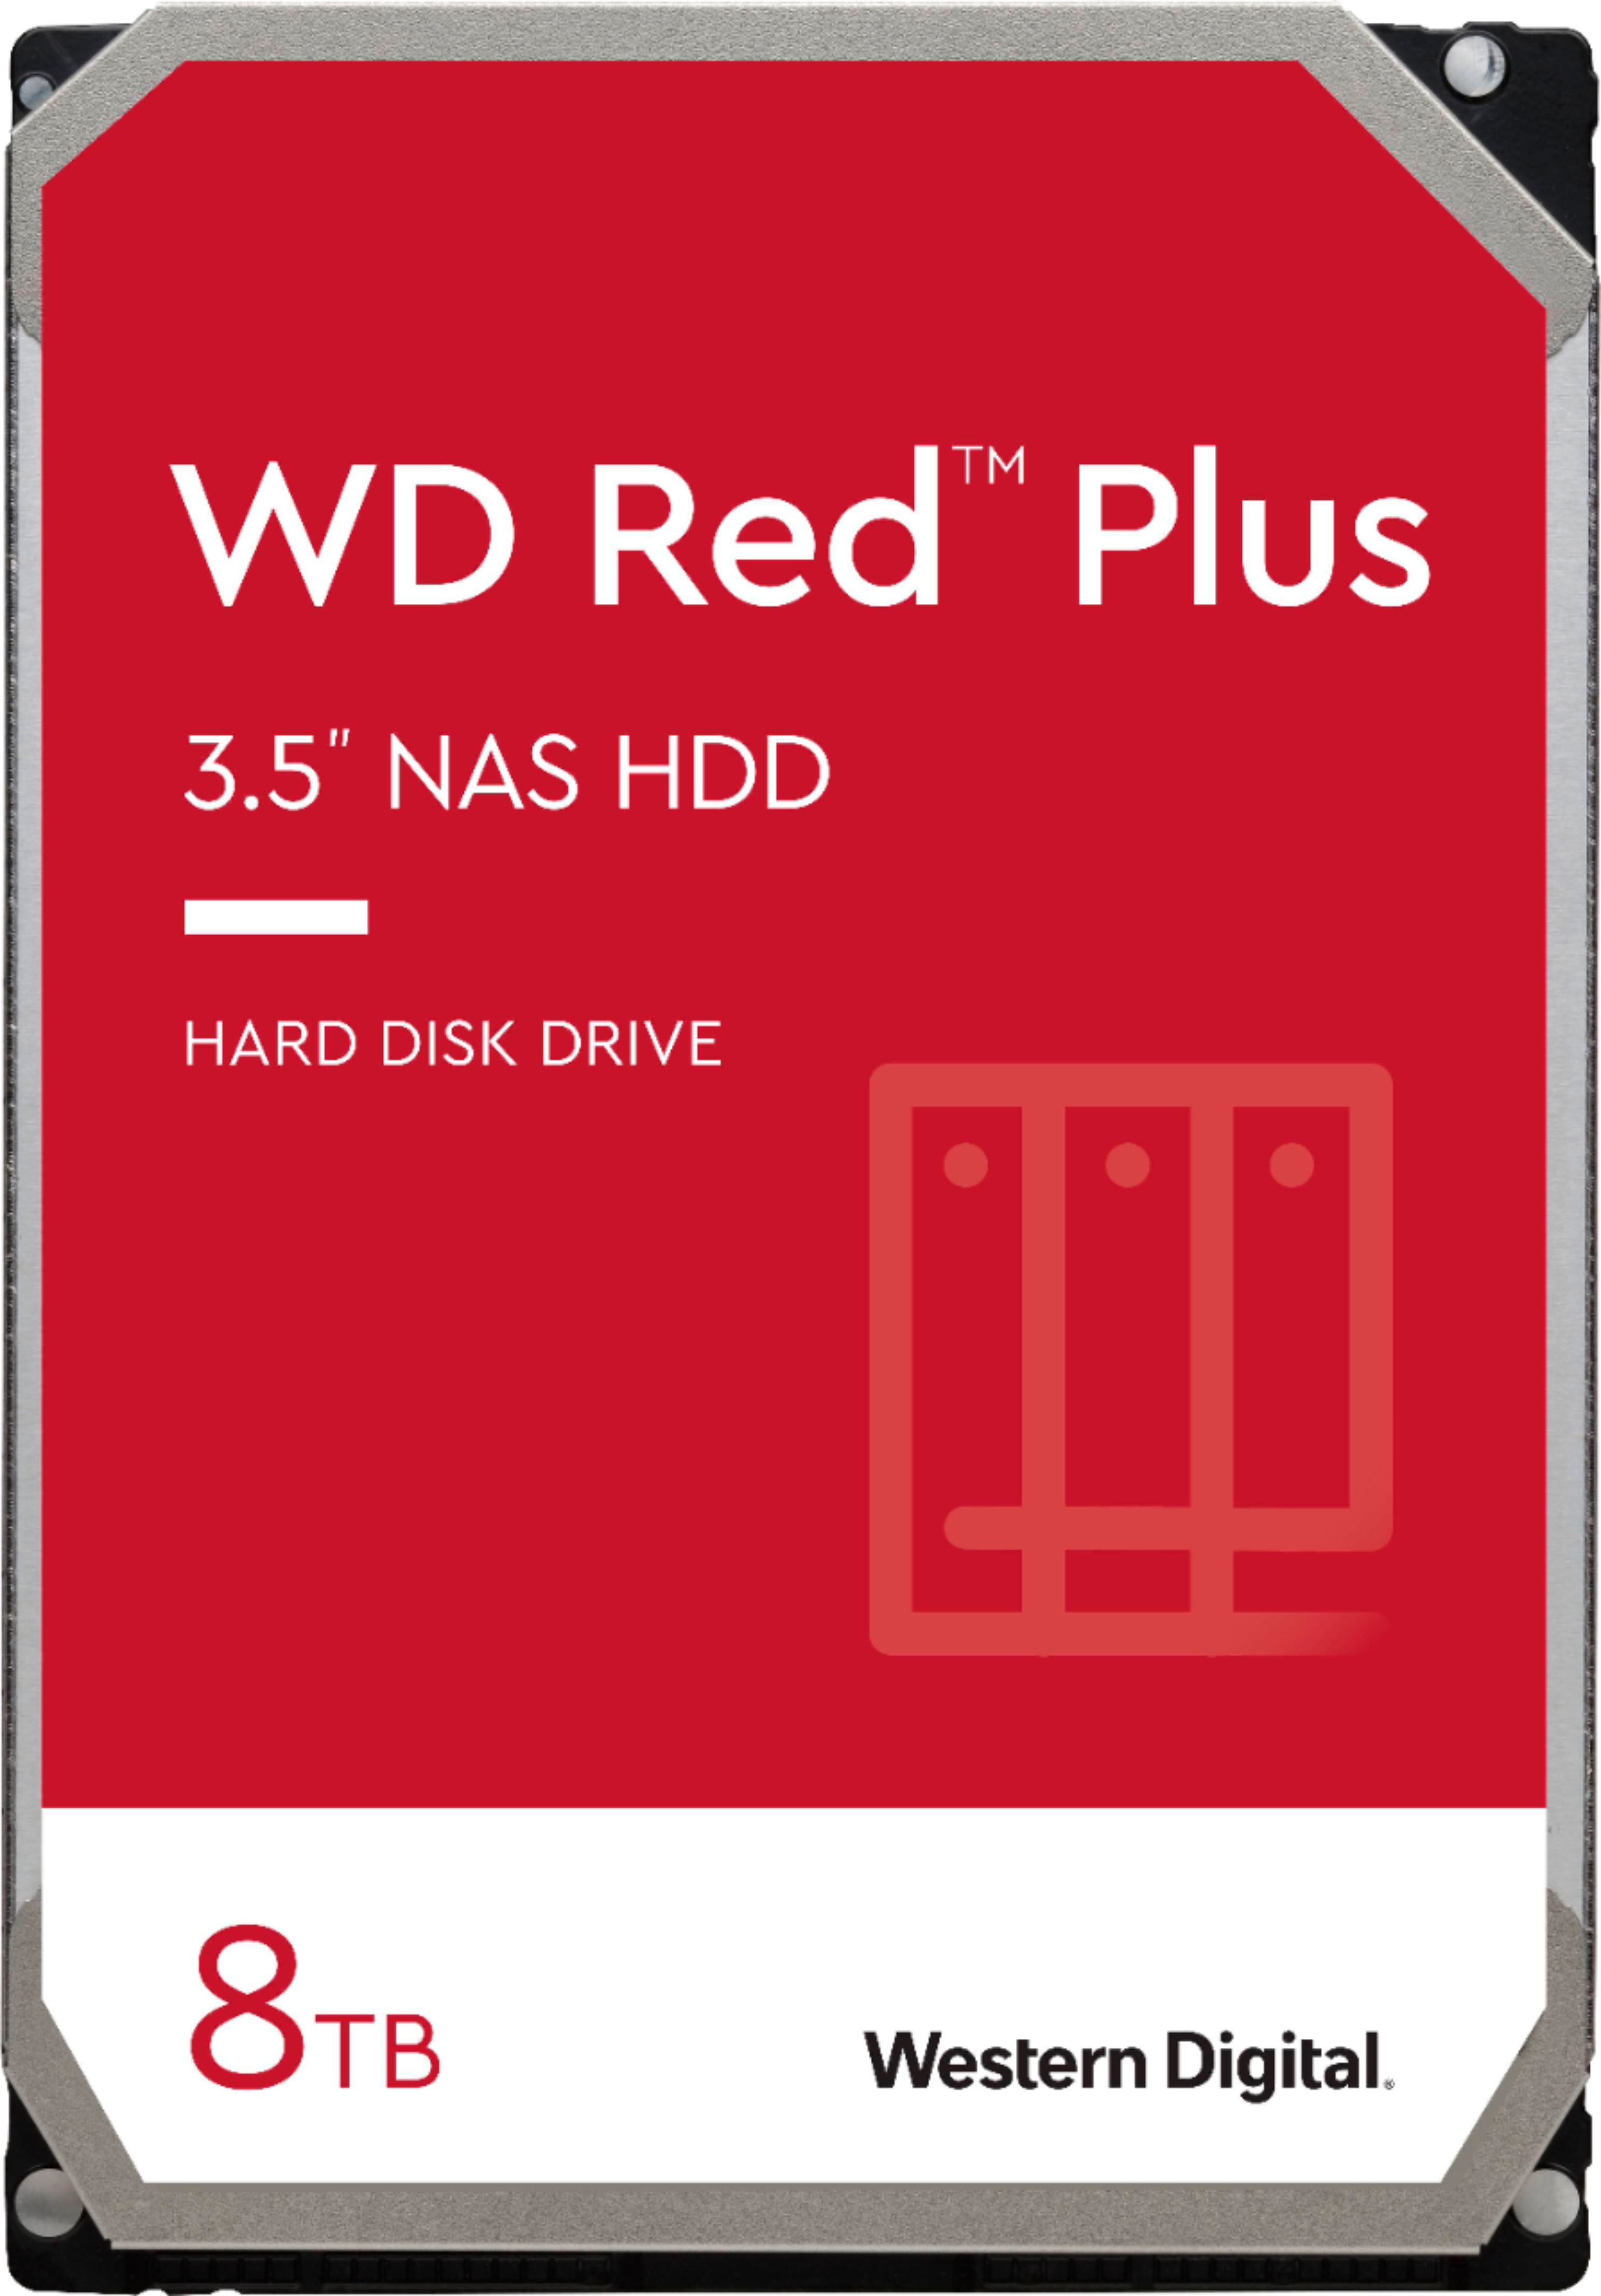 WD Red Plus 8TB Internal SATA NAS Hard Drive for Desktops - $187.99 + FS